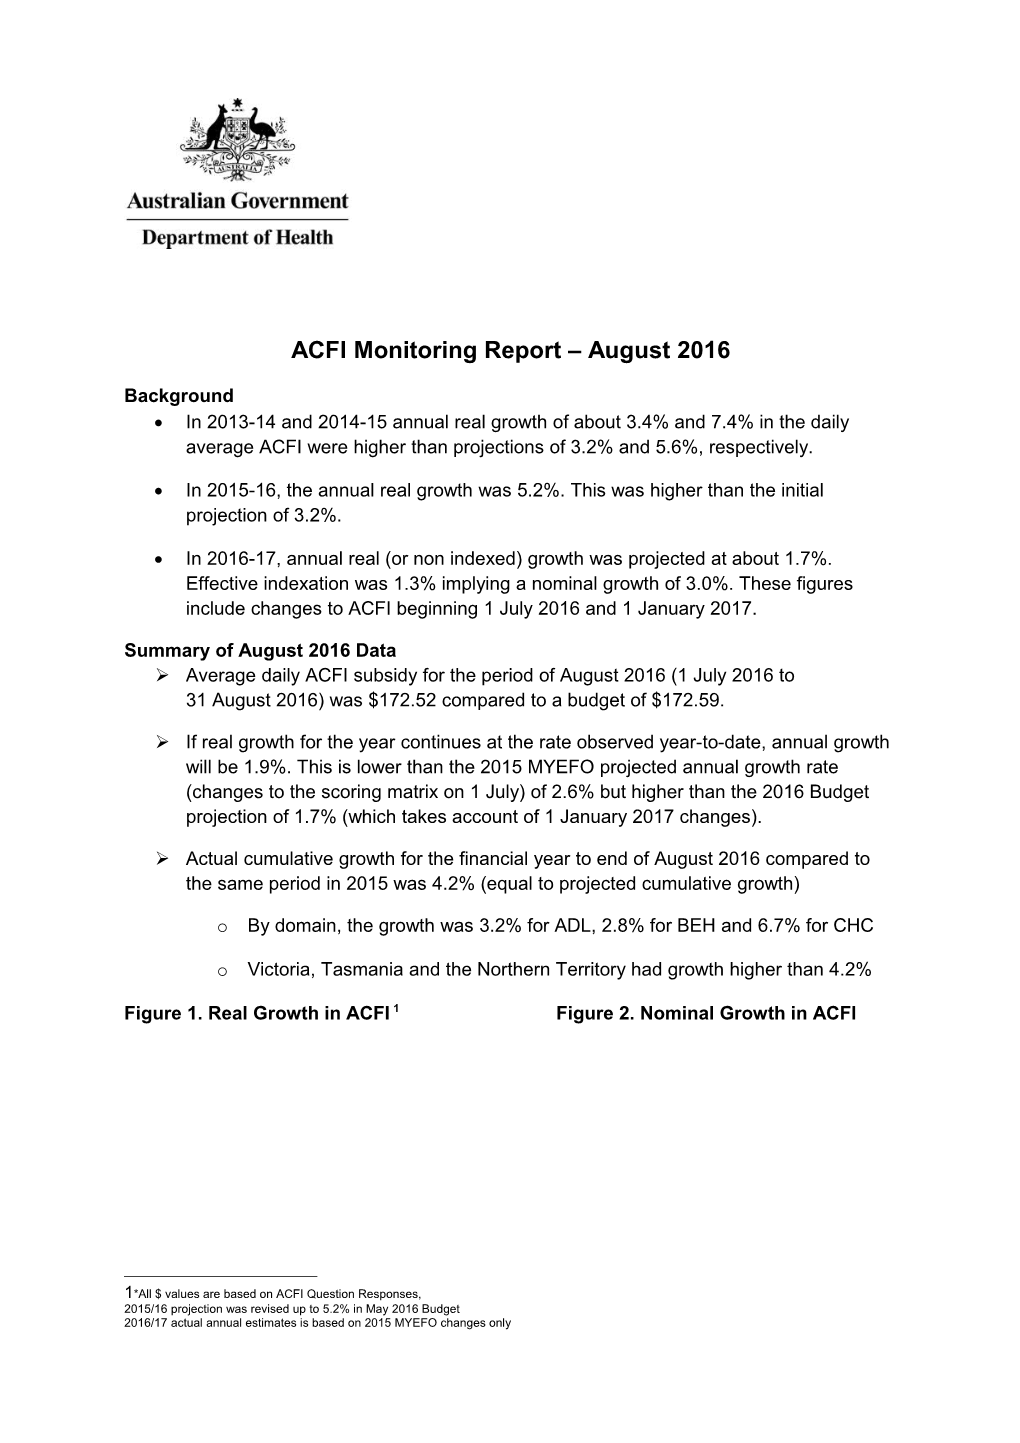 ACFI Monitoring Report August 2016